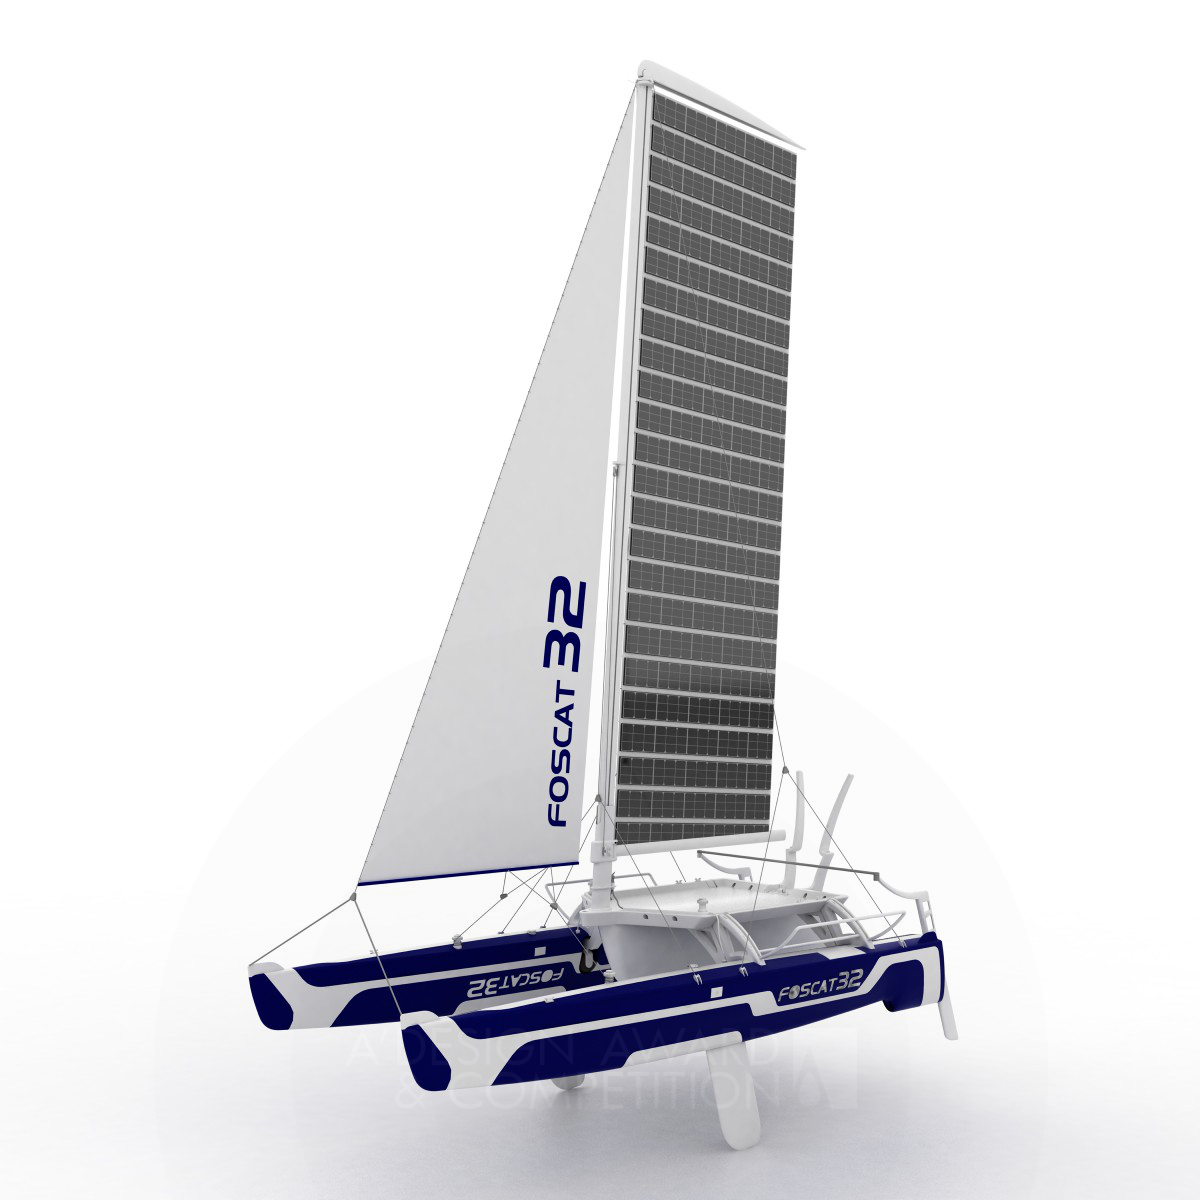 Foscat-32 Folding Solar Catamaran by Hakan Gürsu Platinum Vehicle, Mobility and Transportation Design Award Winner 2011 